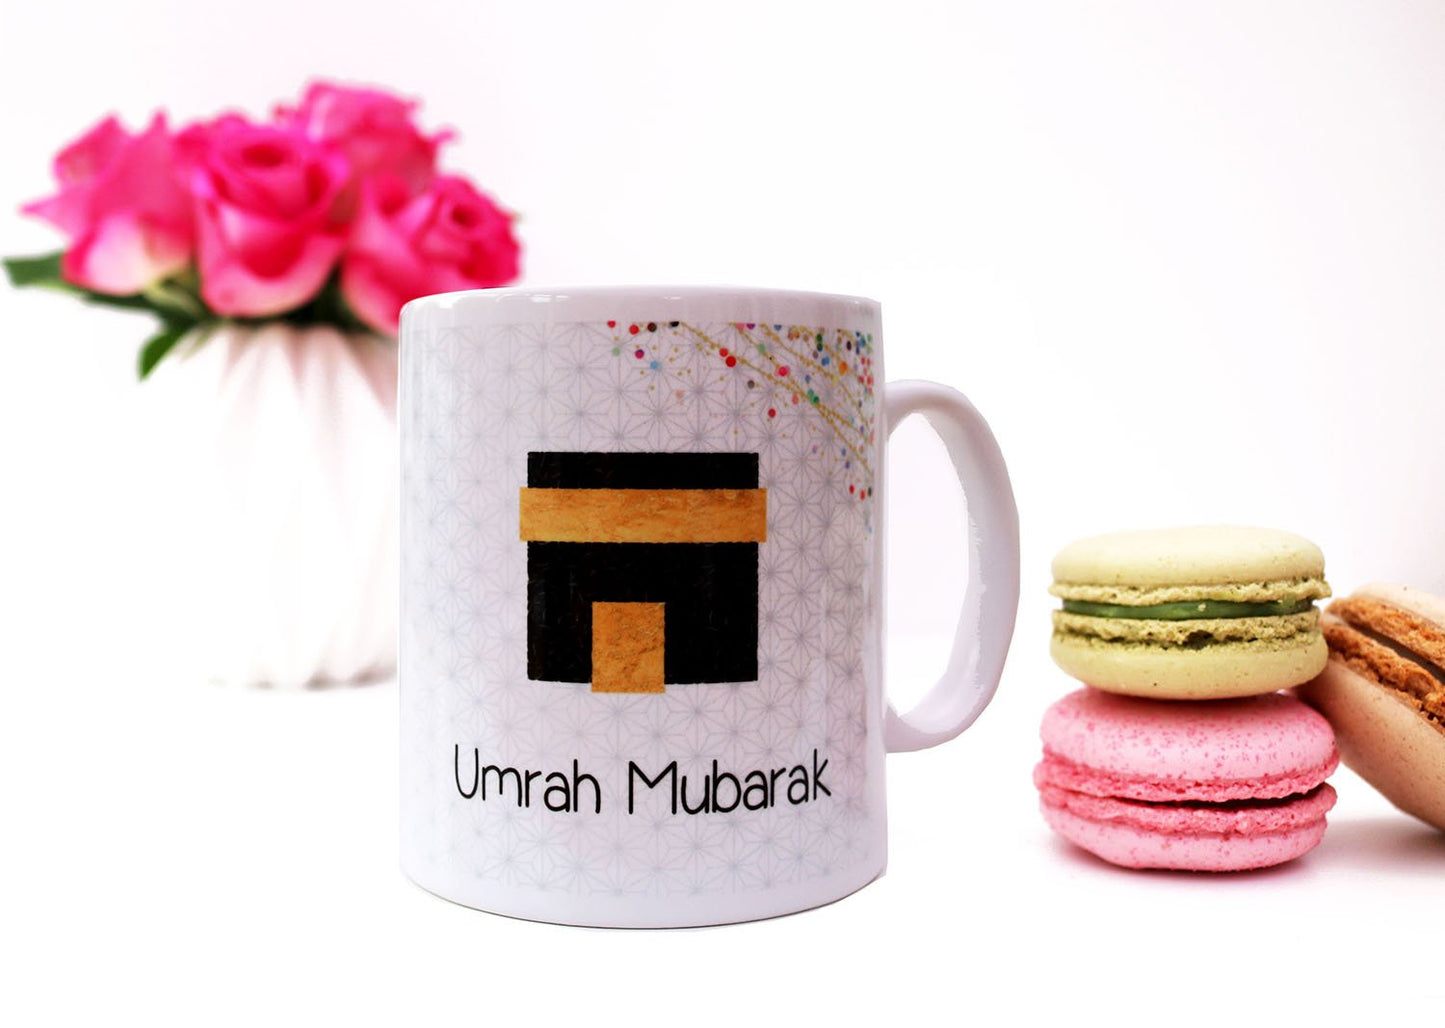 Umrah Mubarak Mug - Anafiya Gifts